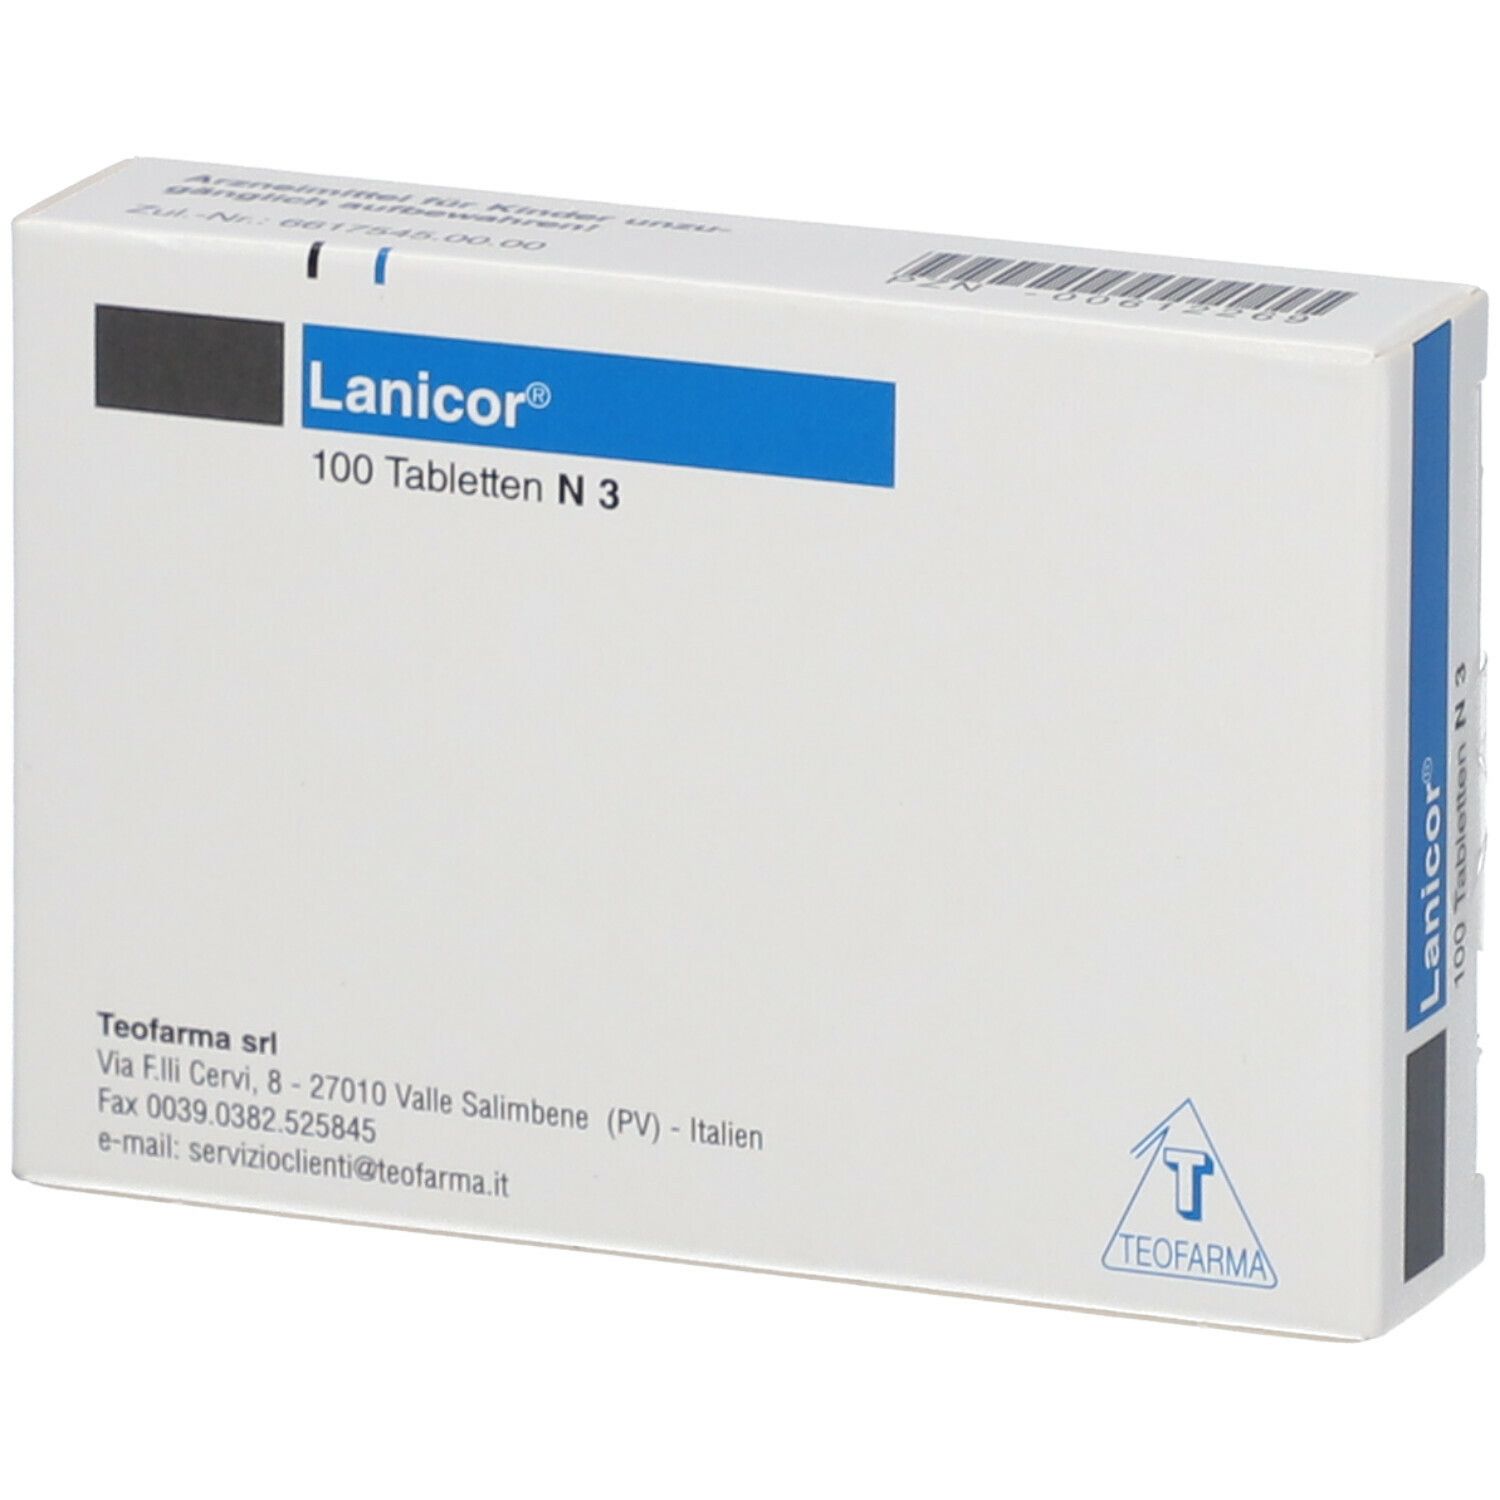 Lanicor® 25 mg Digoxin